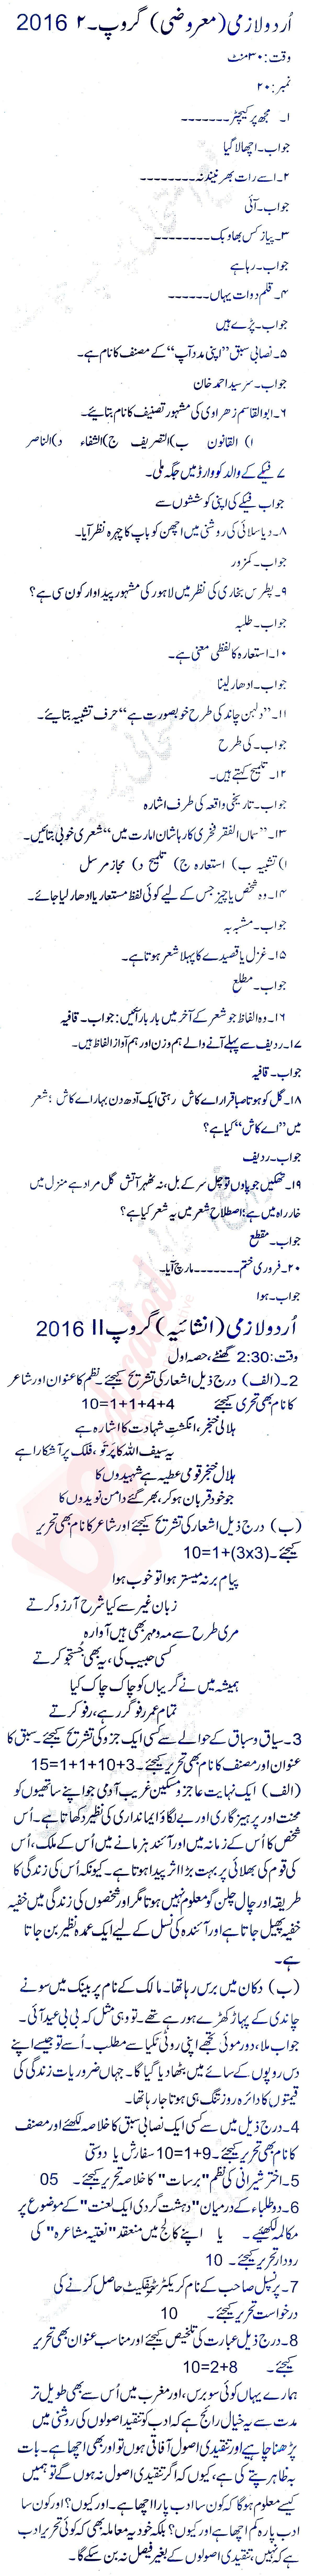 Urdu 11th class Past Paper Group 2 BISE Rawalpindi 2016